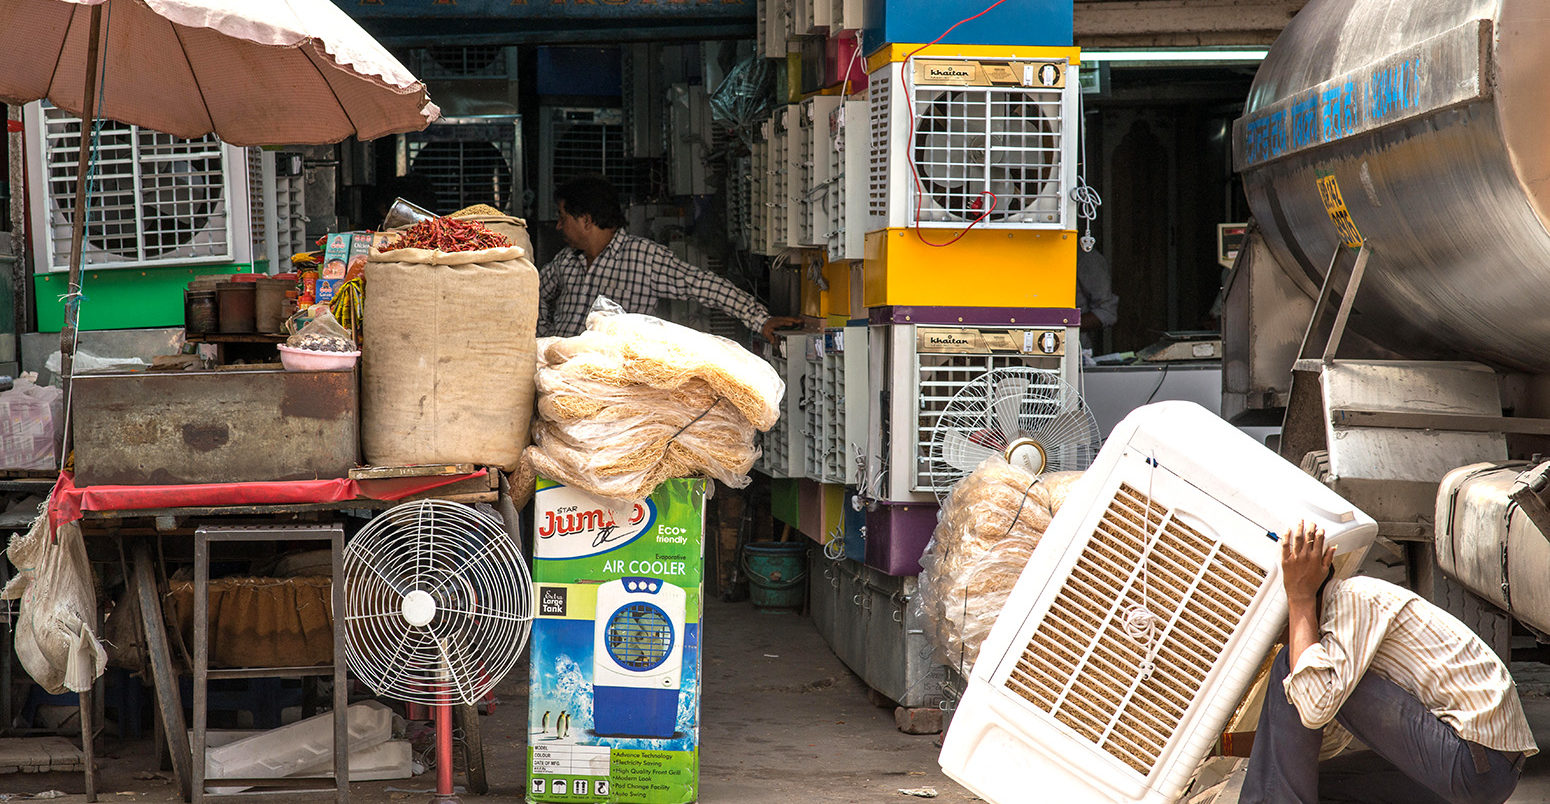 An air conditioning vendor prepares a unit for sale in Delhi, India. Credit: Kevin Su / Alamy Stock Photo.